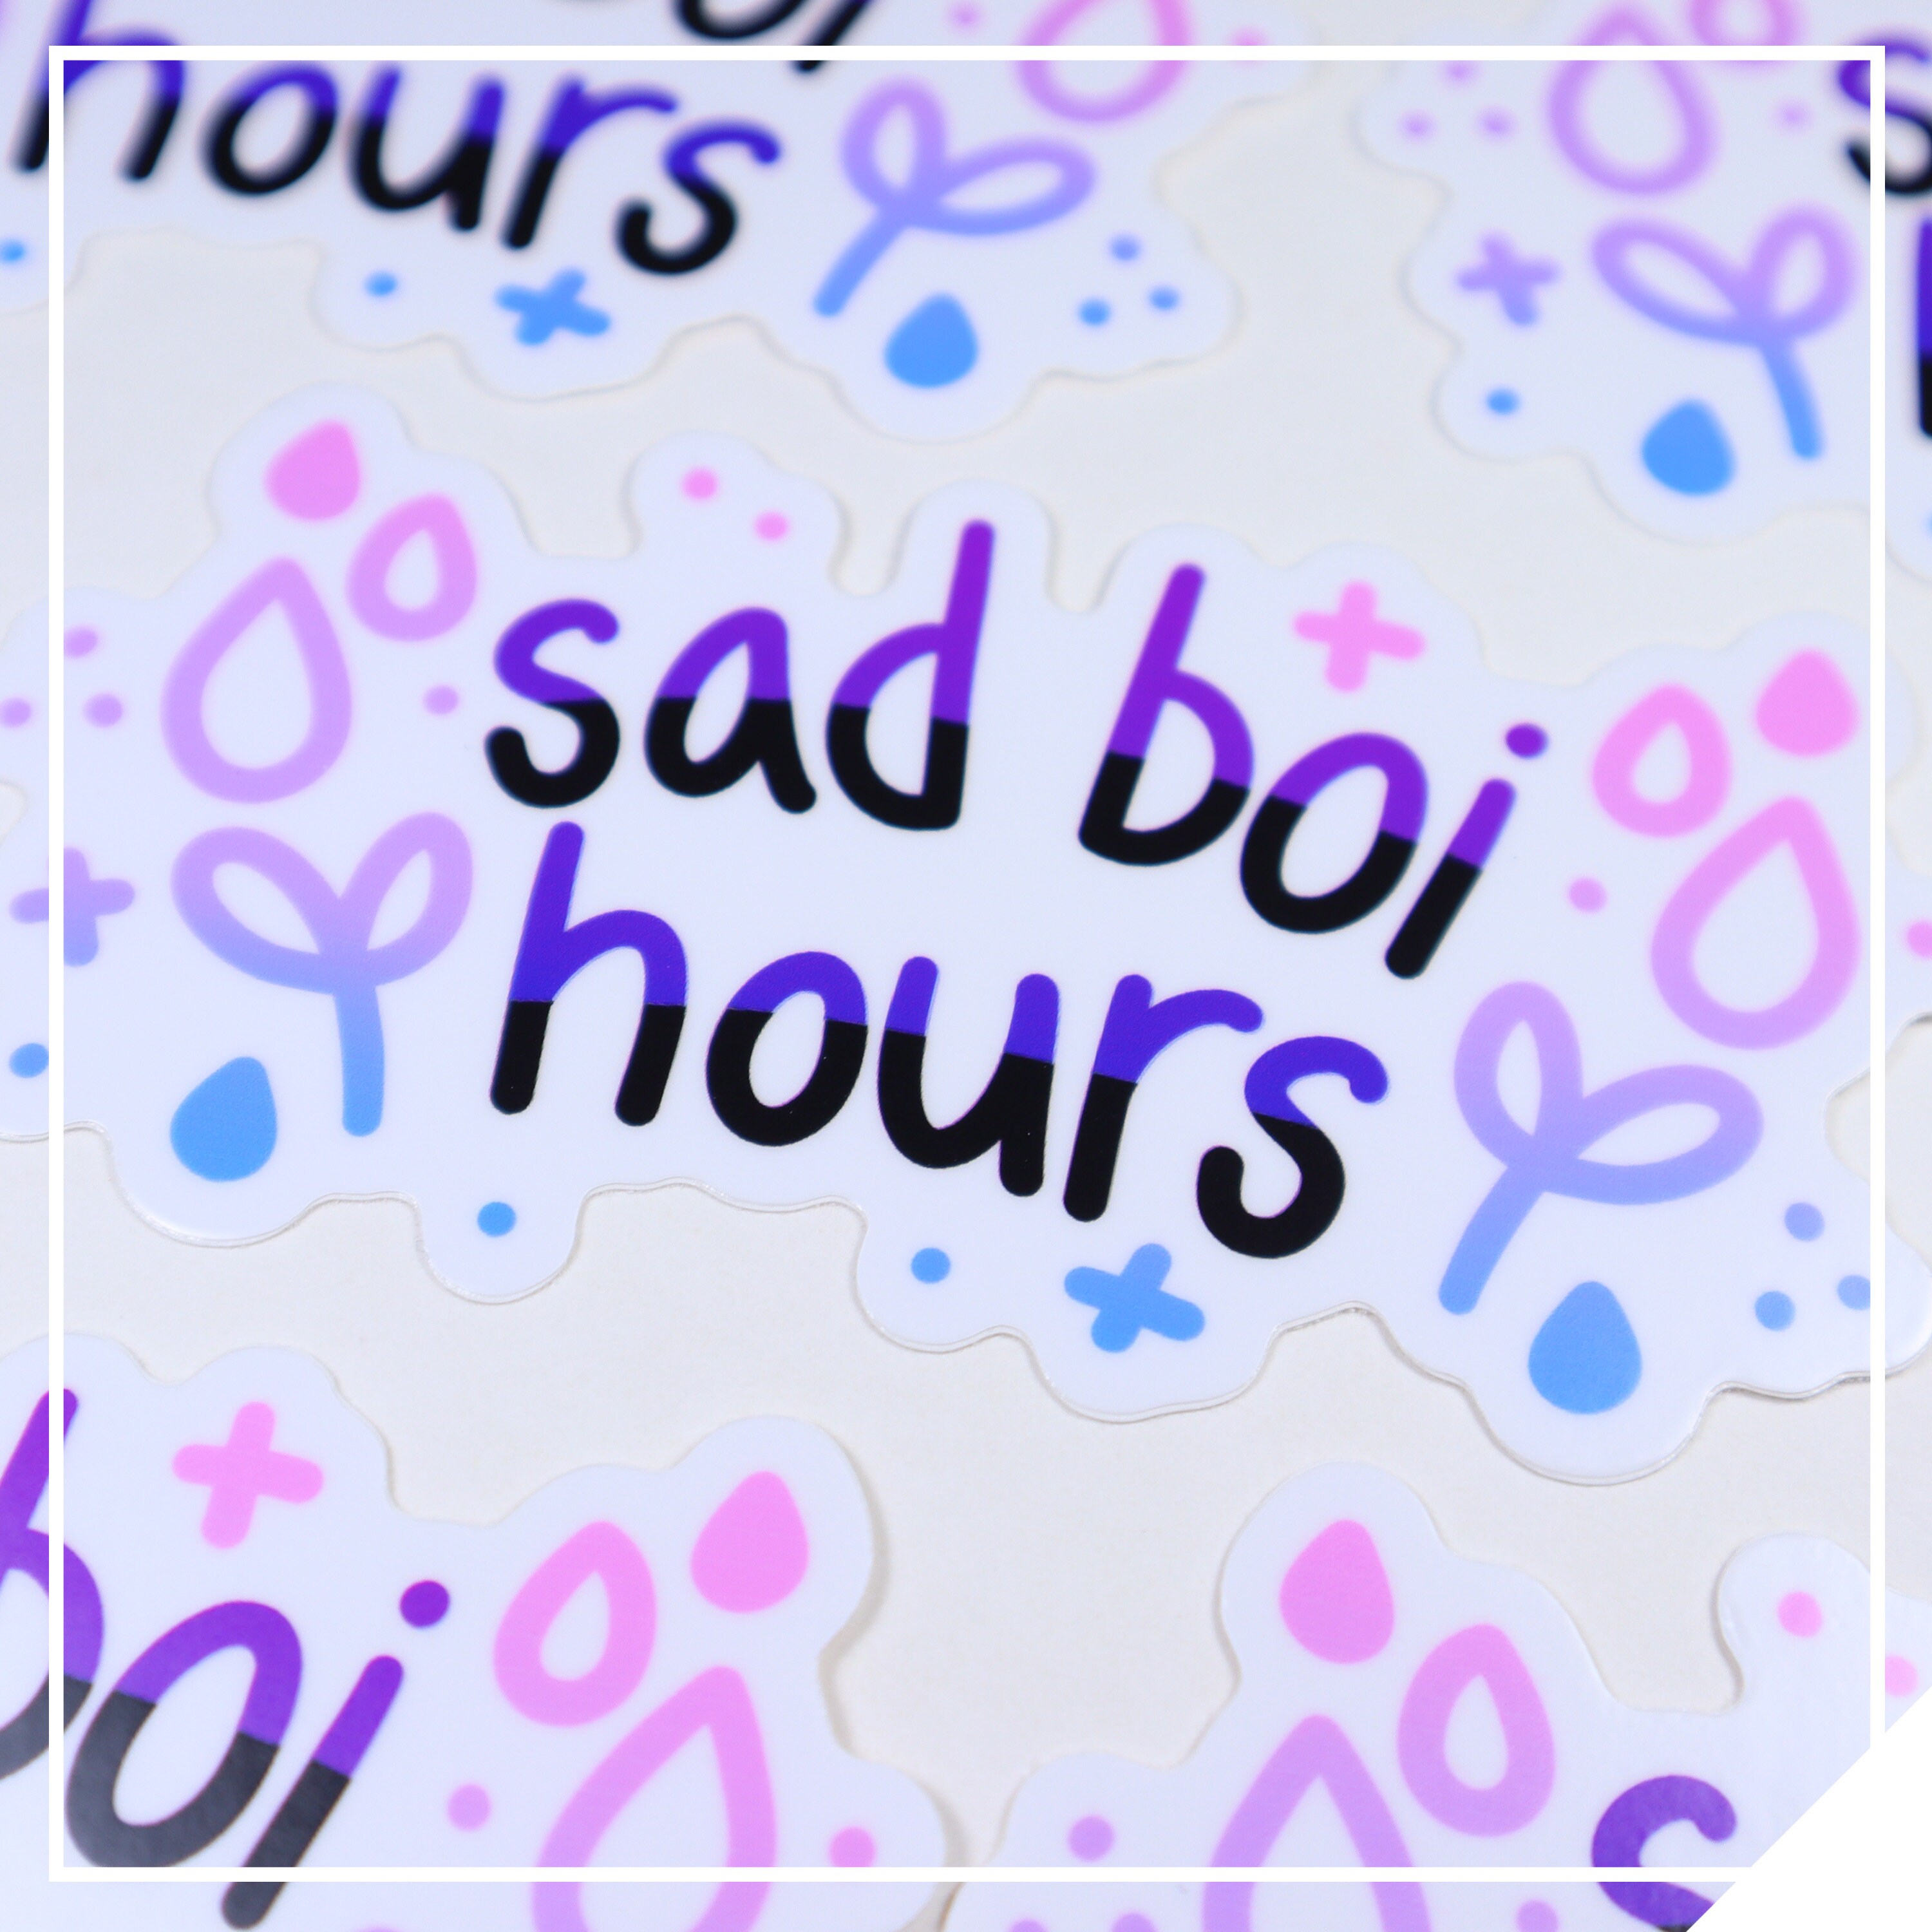 Depressed Anime Sad Girl Waifu Slap Sticker Vinyl Sticker Car